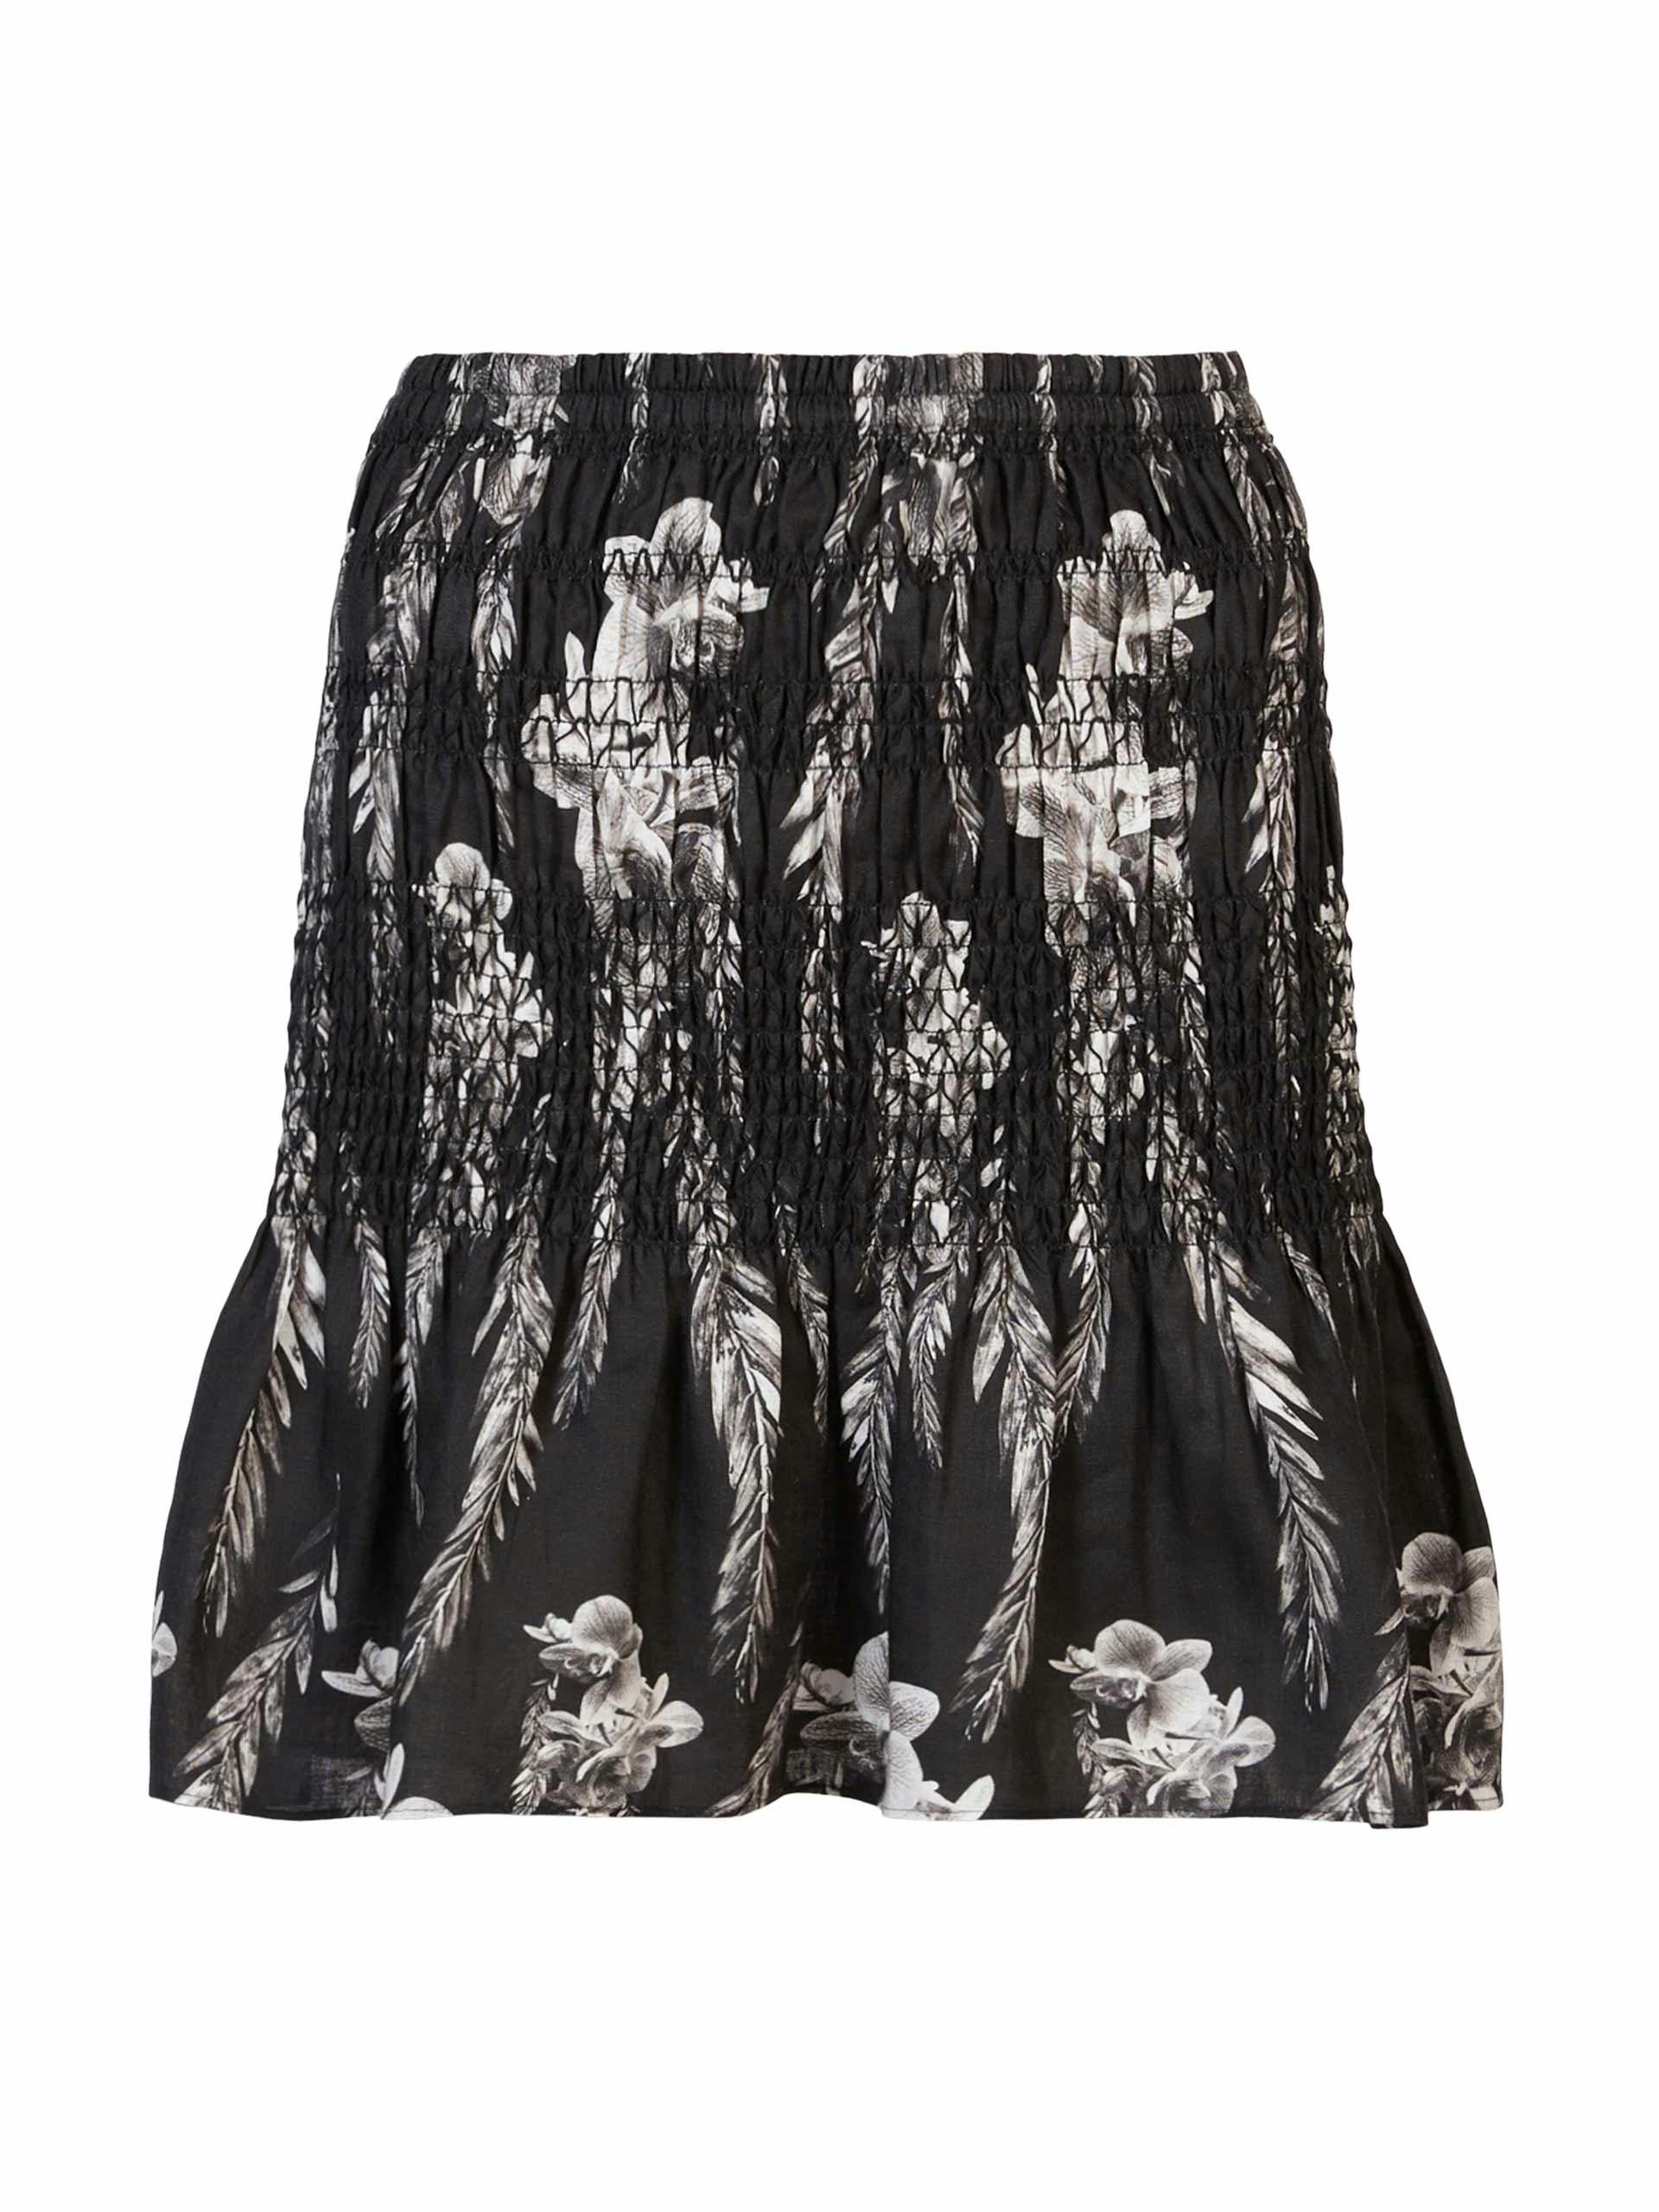 Floral black linen skirt